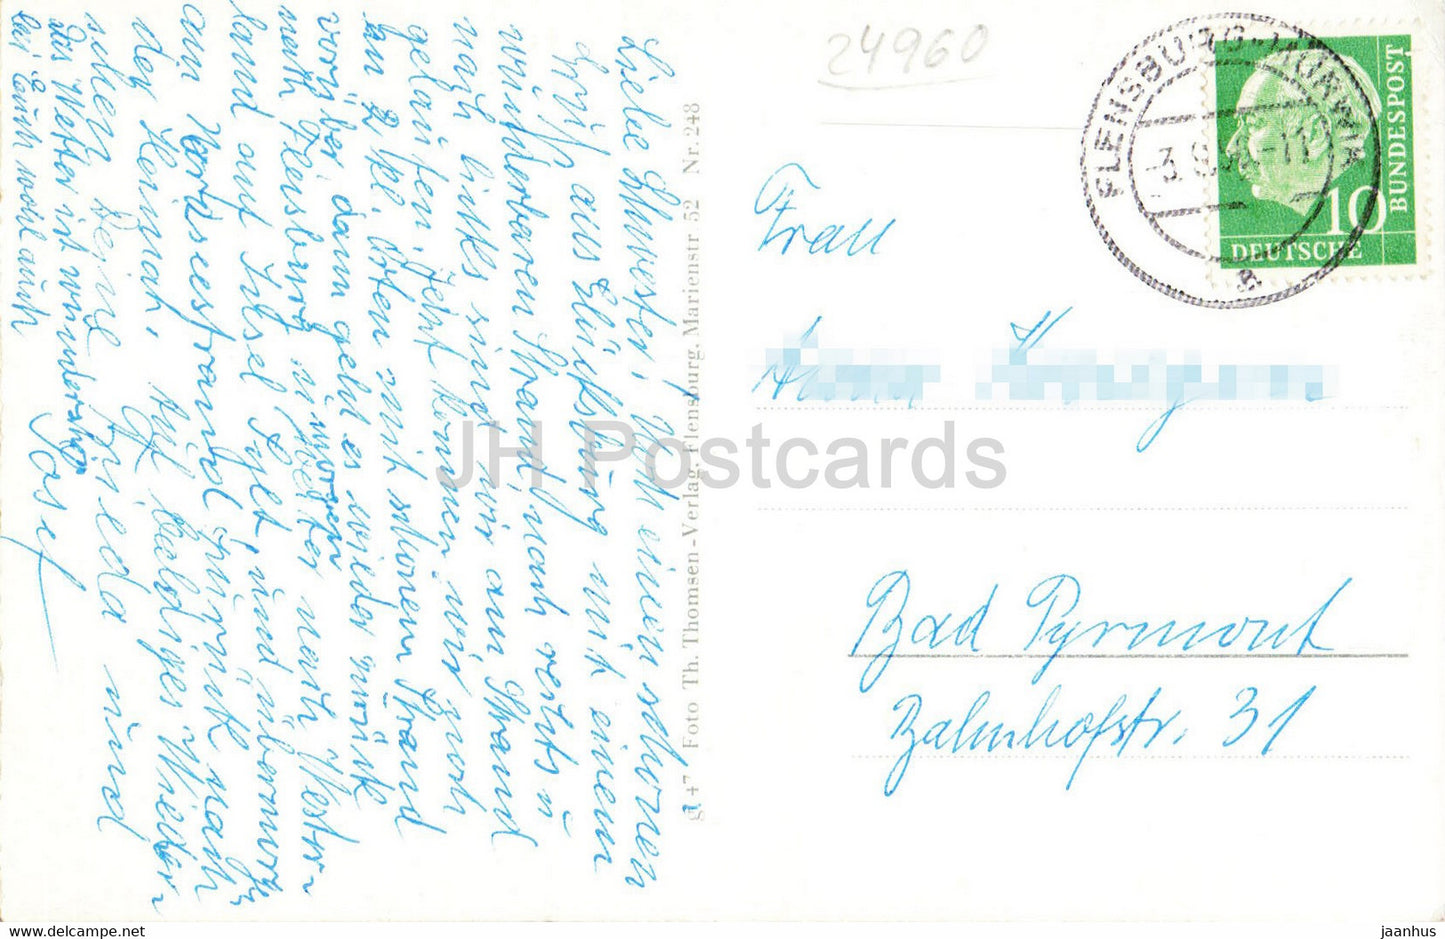 Schloss Glucksburg - château - cygne - oiseaux - carte postale ancienne - 1956 - Allemagne - utilisé